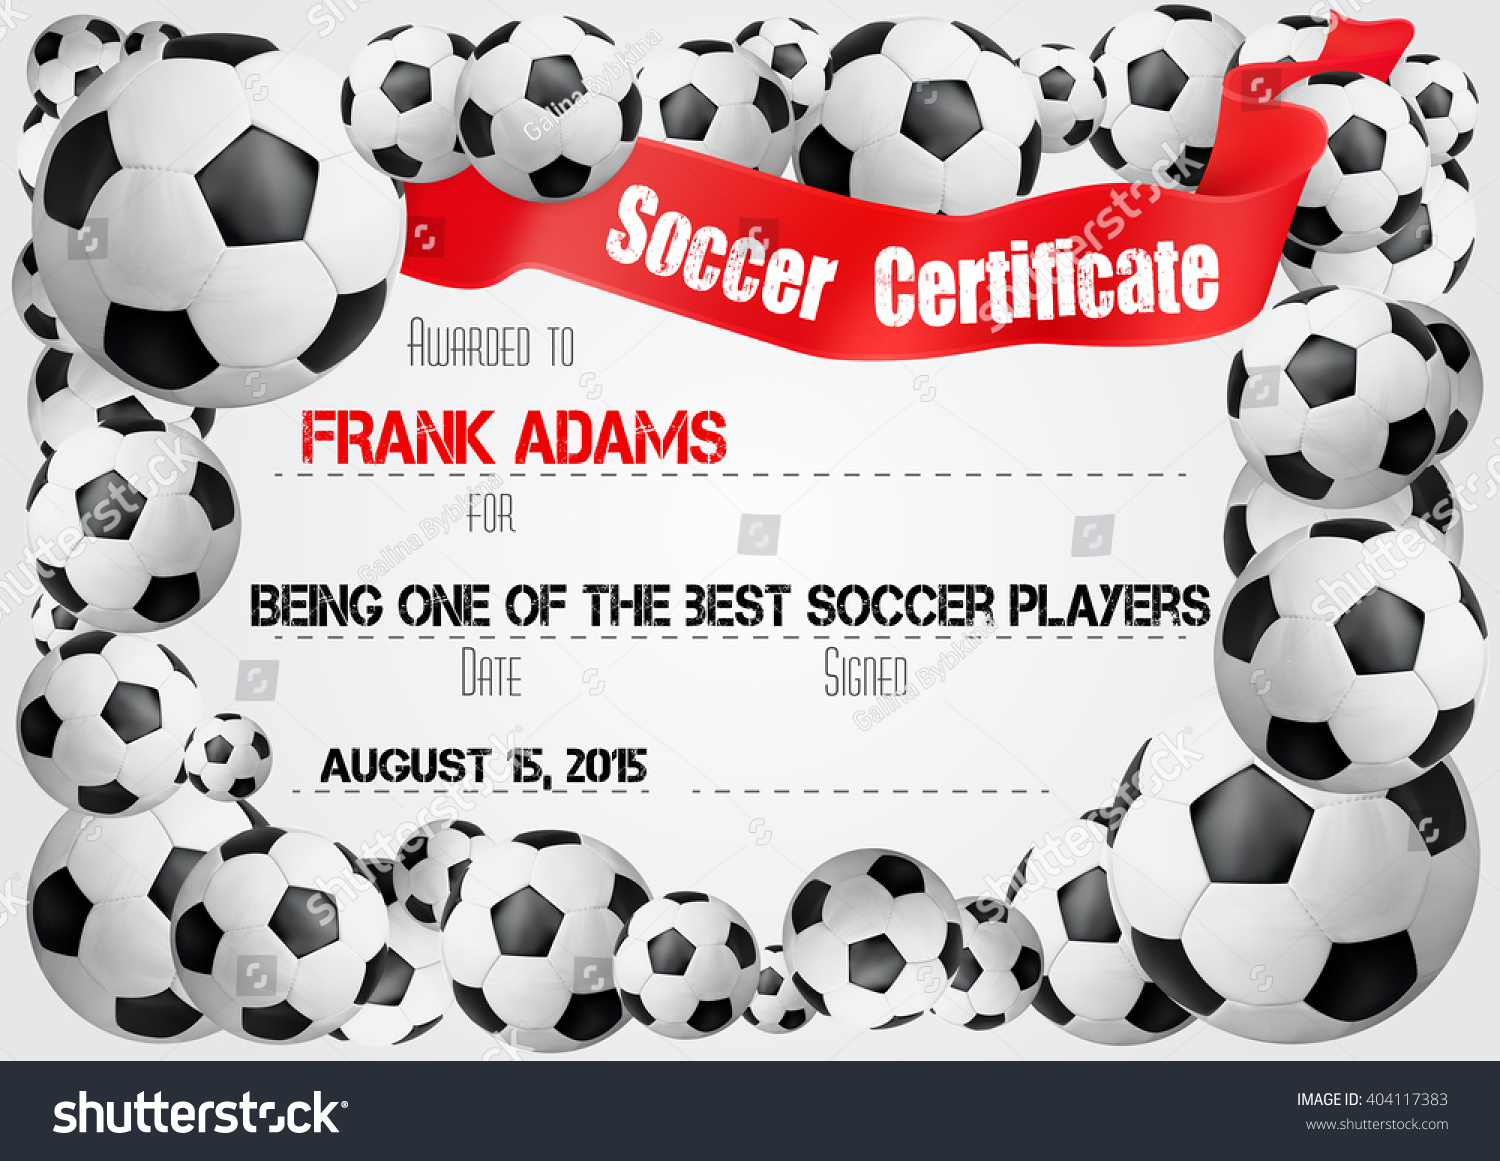 Soccer Certificate Template Football Ball Icons Stock Vector Inside Soccer Certificate Template Free